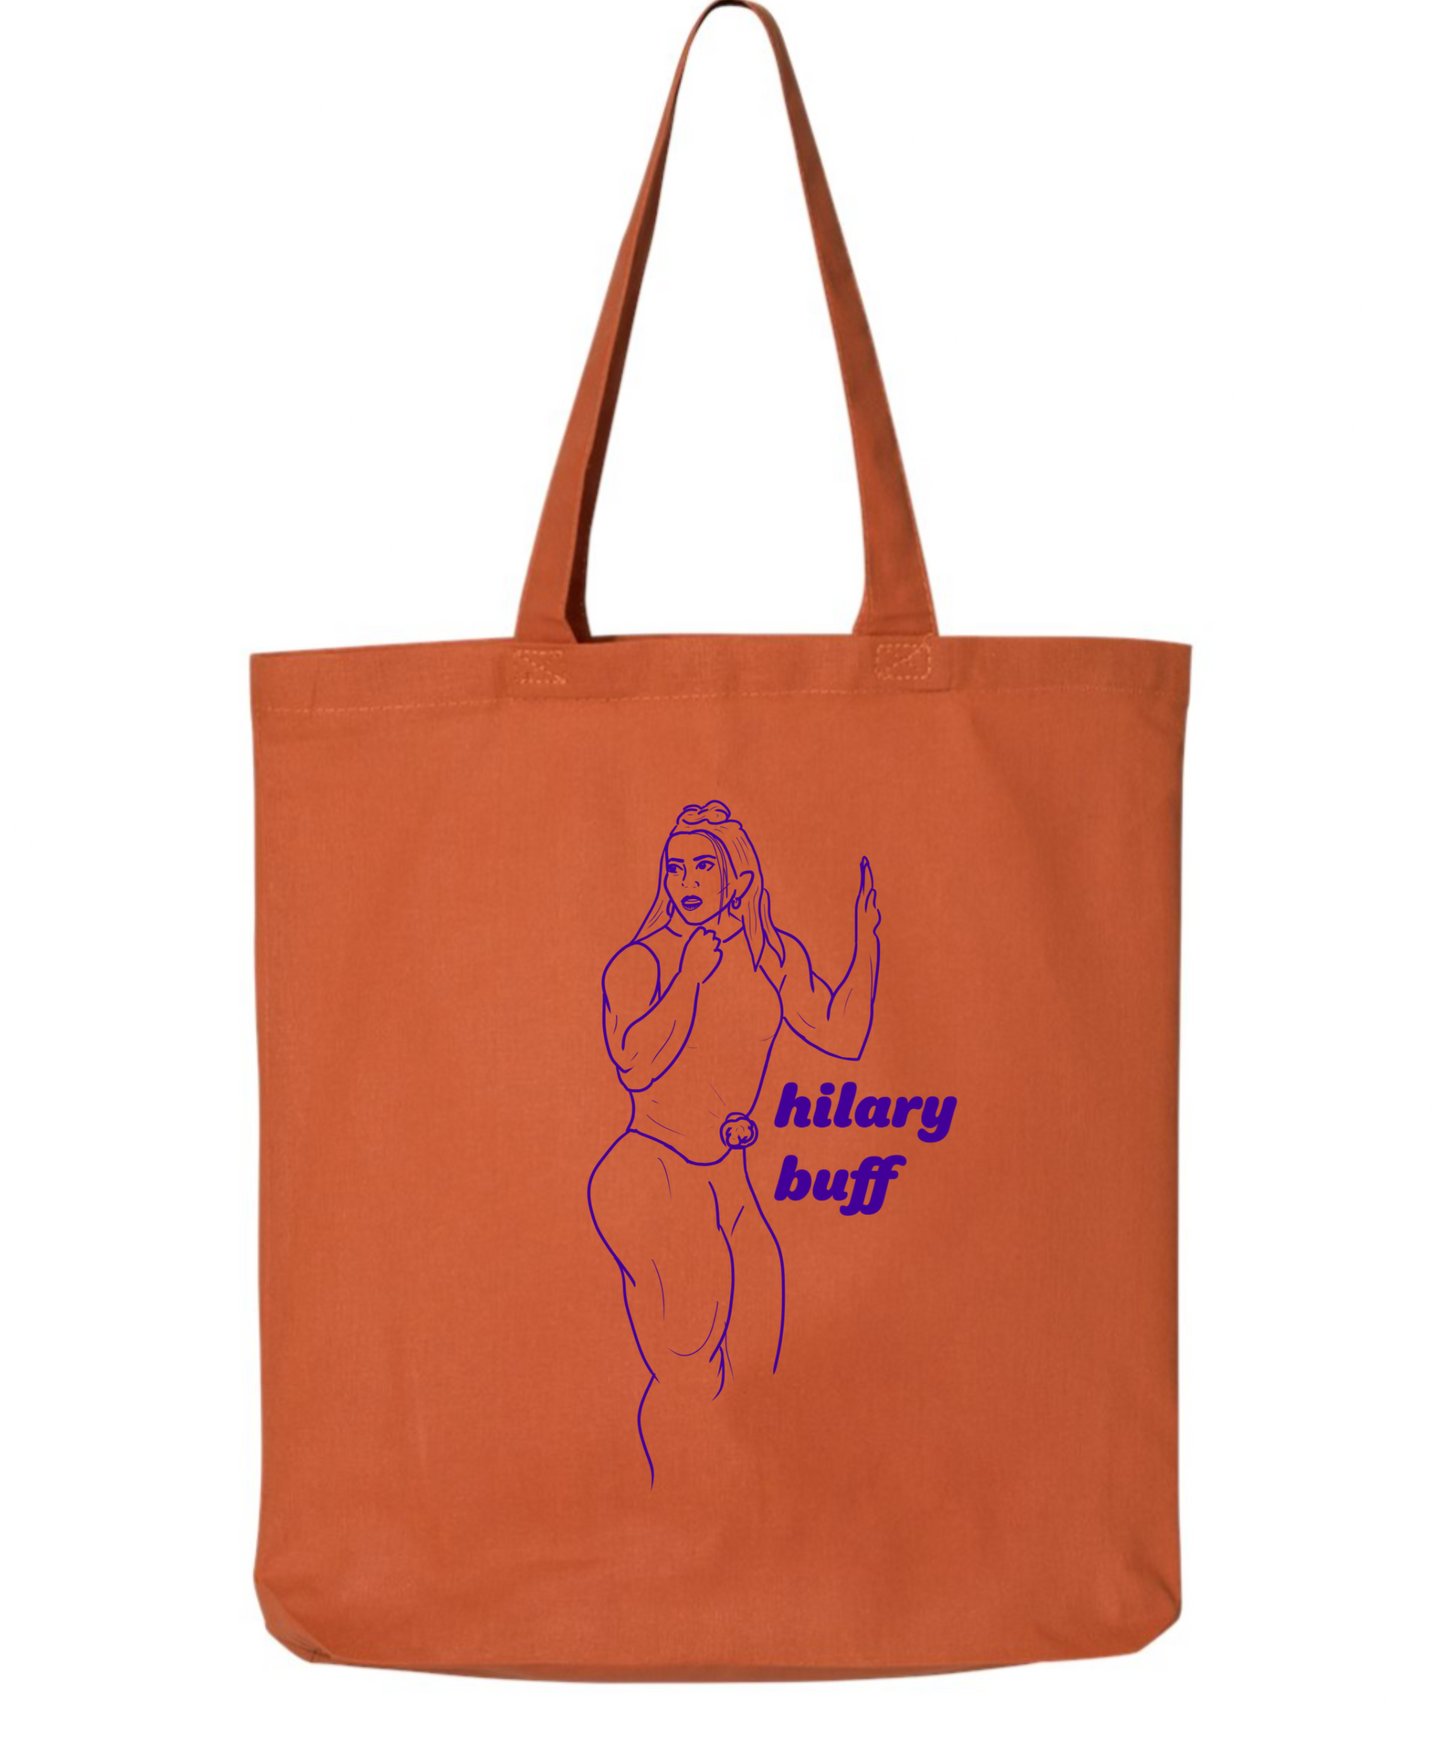 Hilary Buff x Swole Woman Barbell Club tote bag (Limited run)